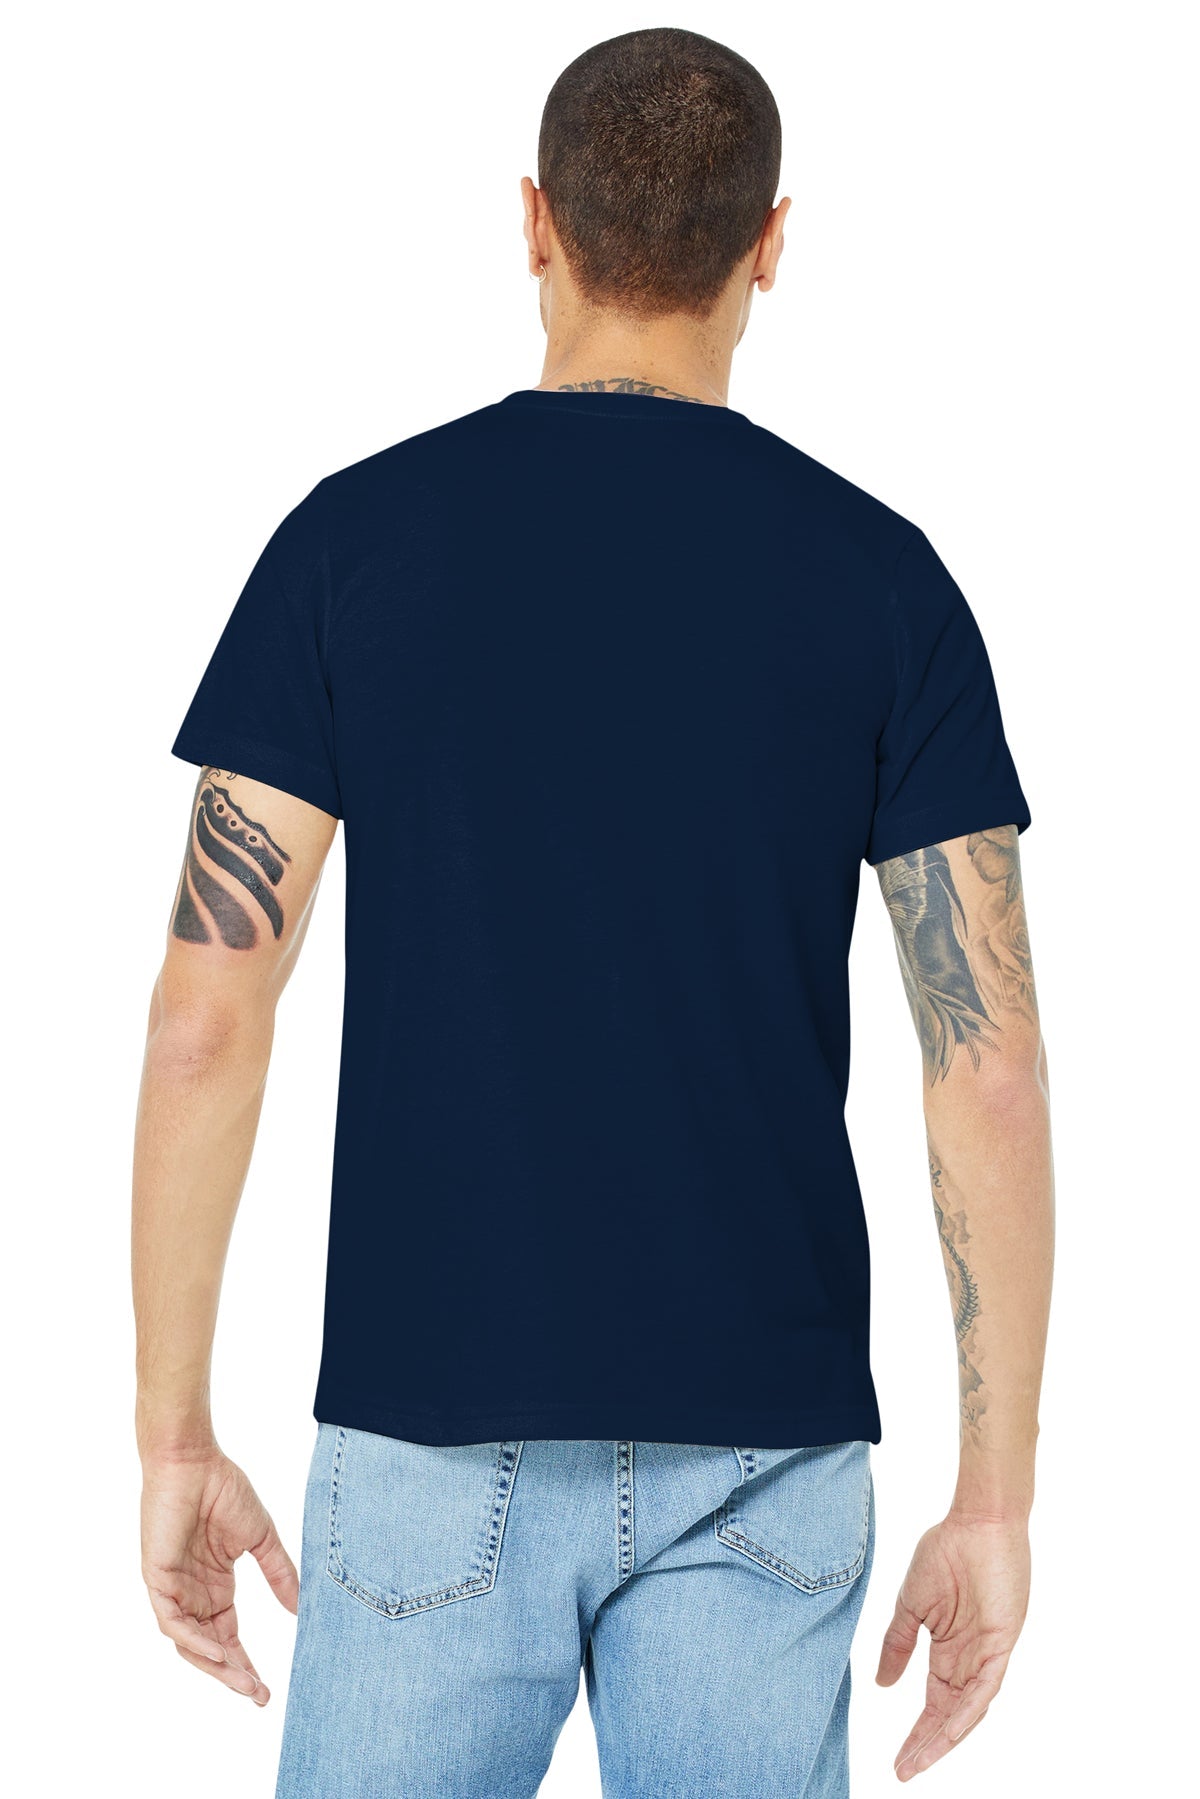 bella + canvas unisex made in the usa jersey short sleeve t-shirt 3001u navy